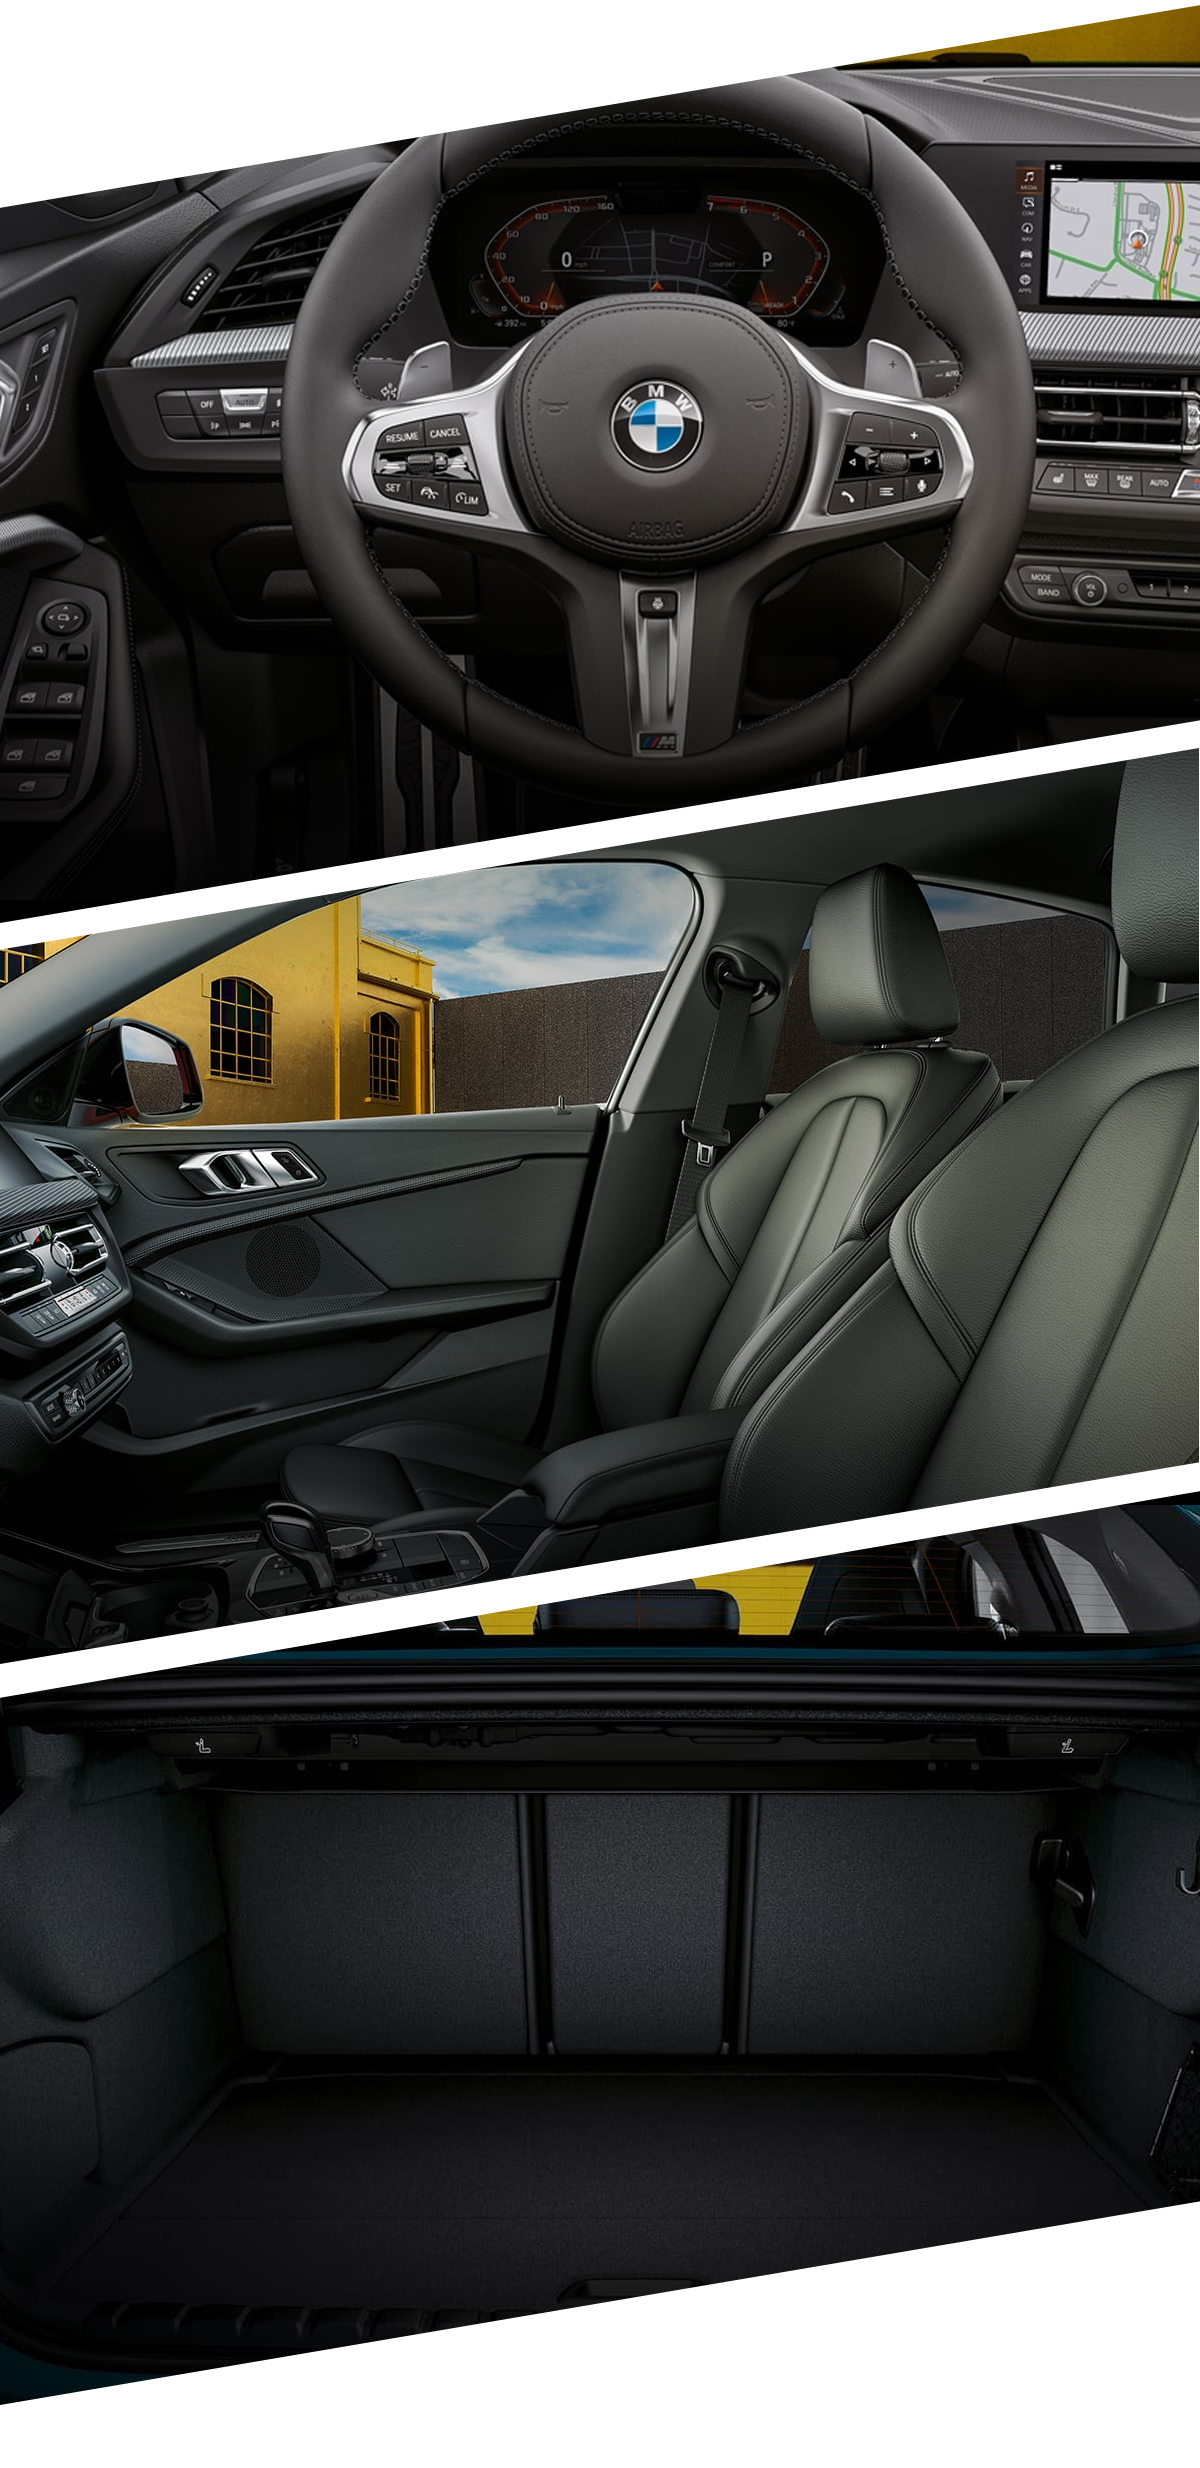 2022 BMW 2 Series Interior Images